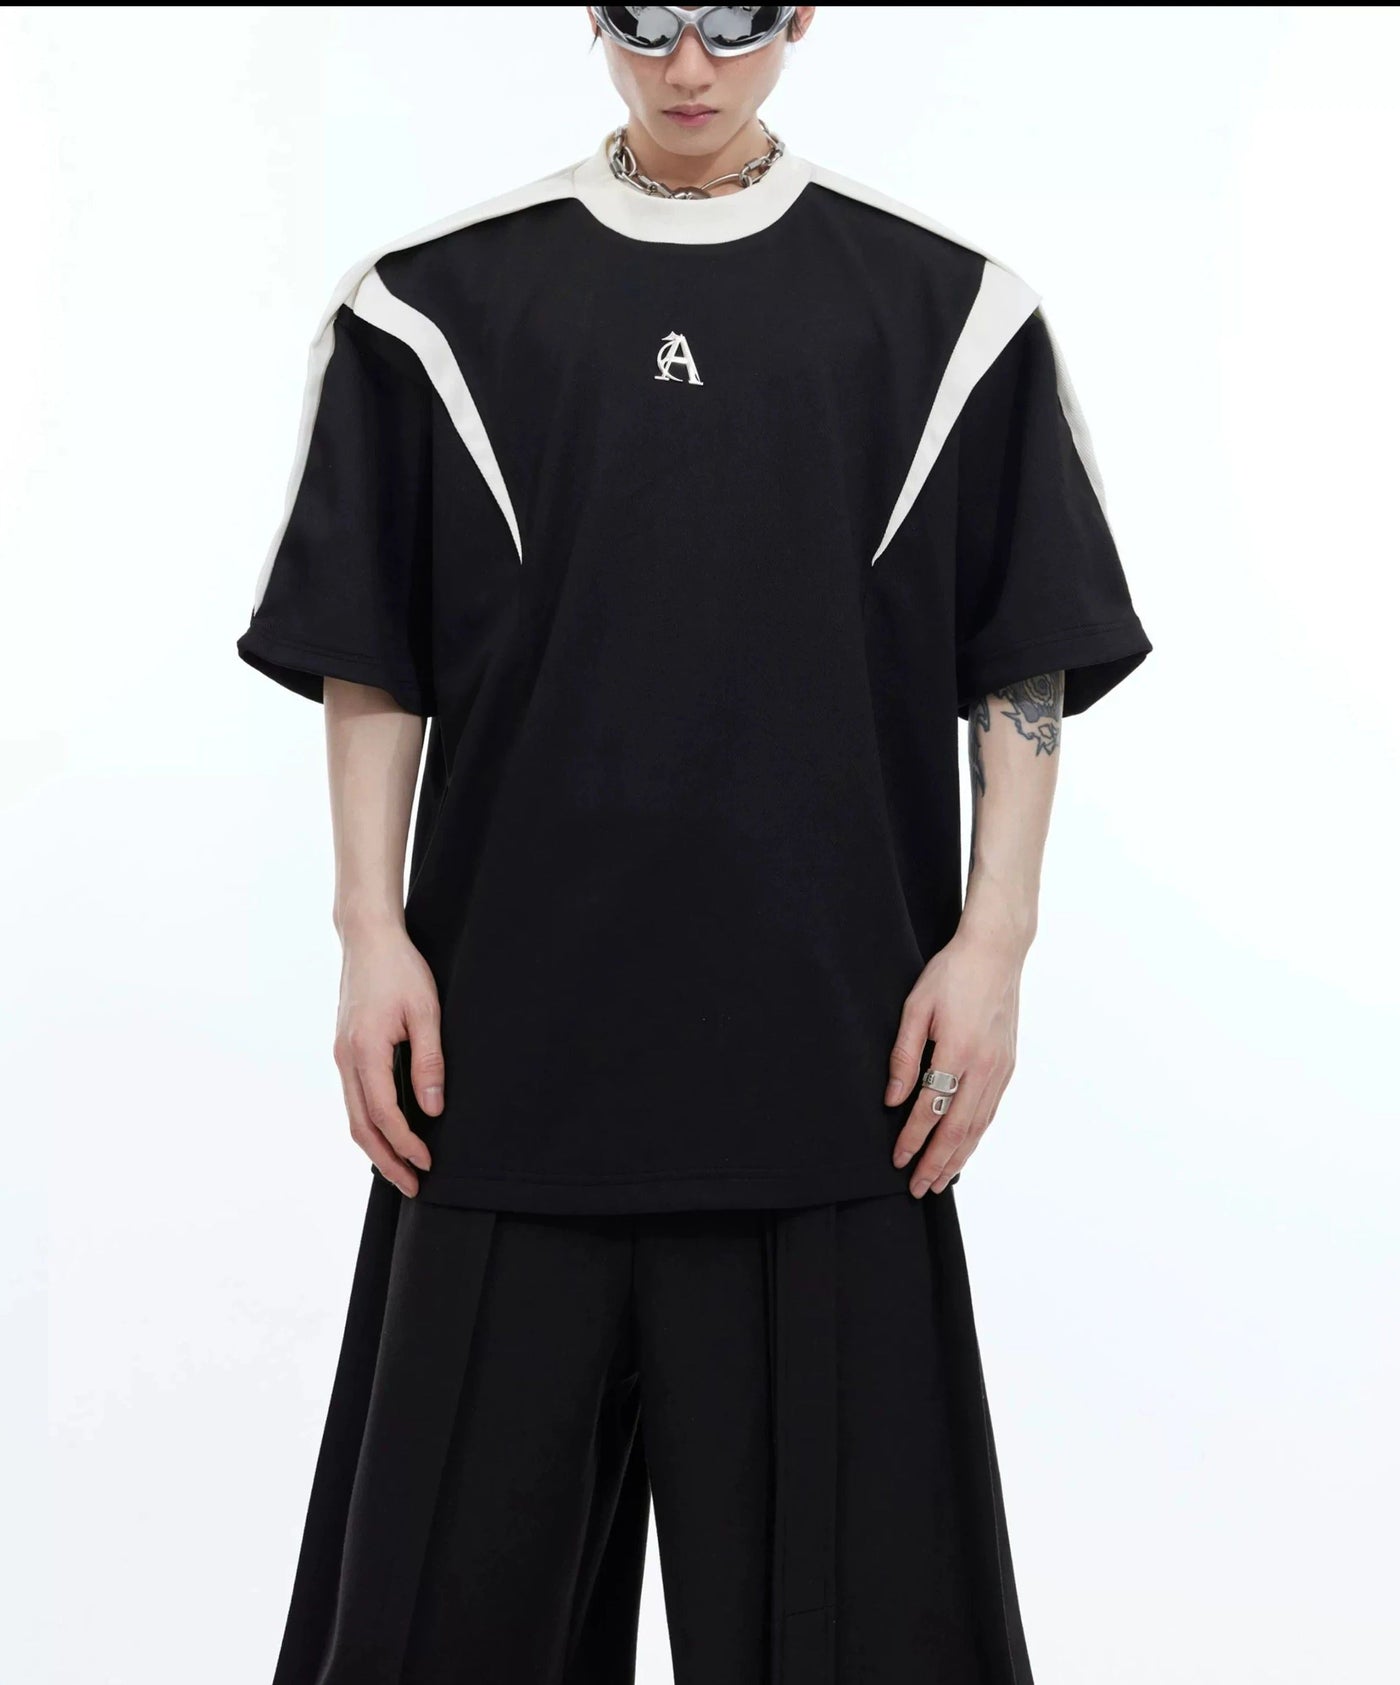 Lettered Accent Contrast T-Shirt Korean Street Fashion T-Shirt By Argue Culture Shop Online at OH Vault